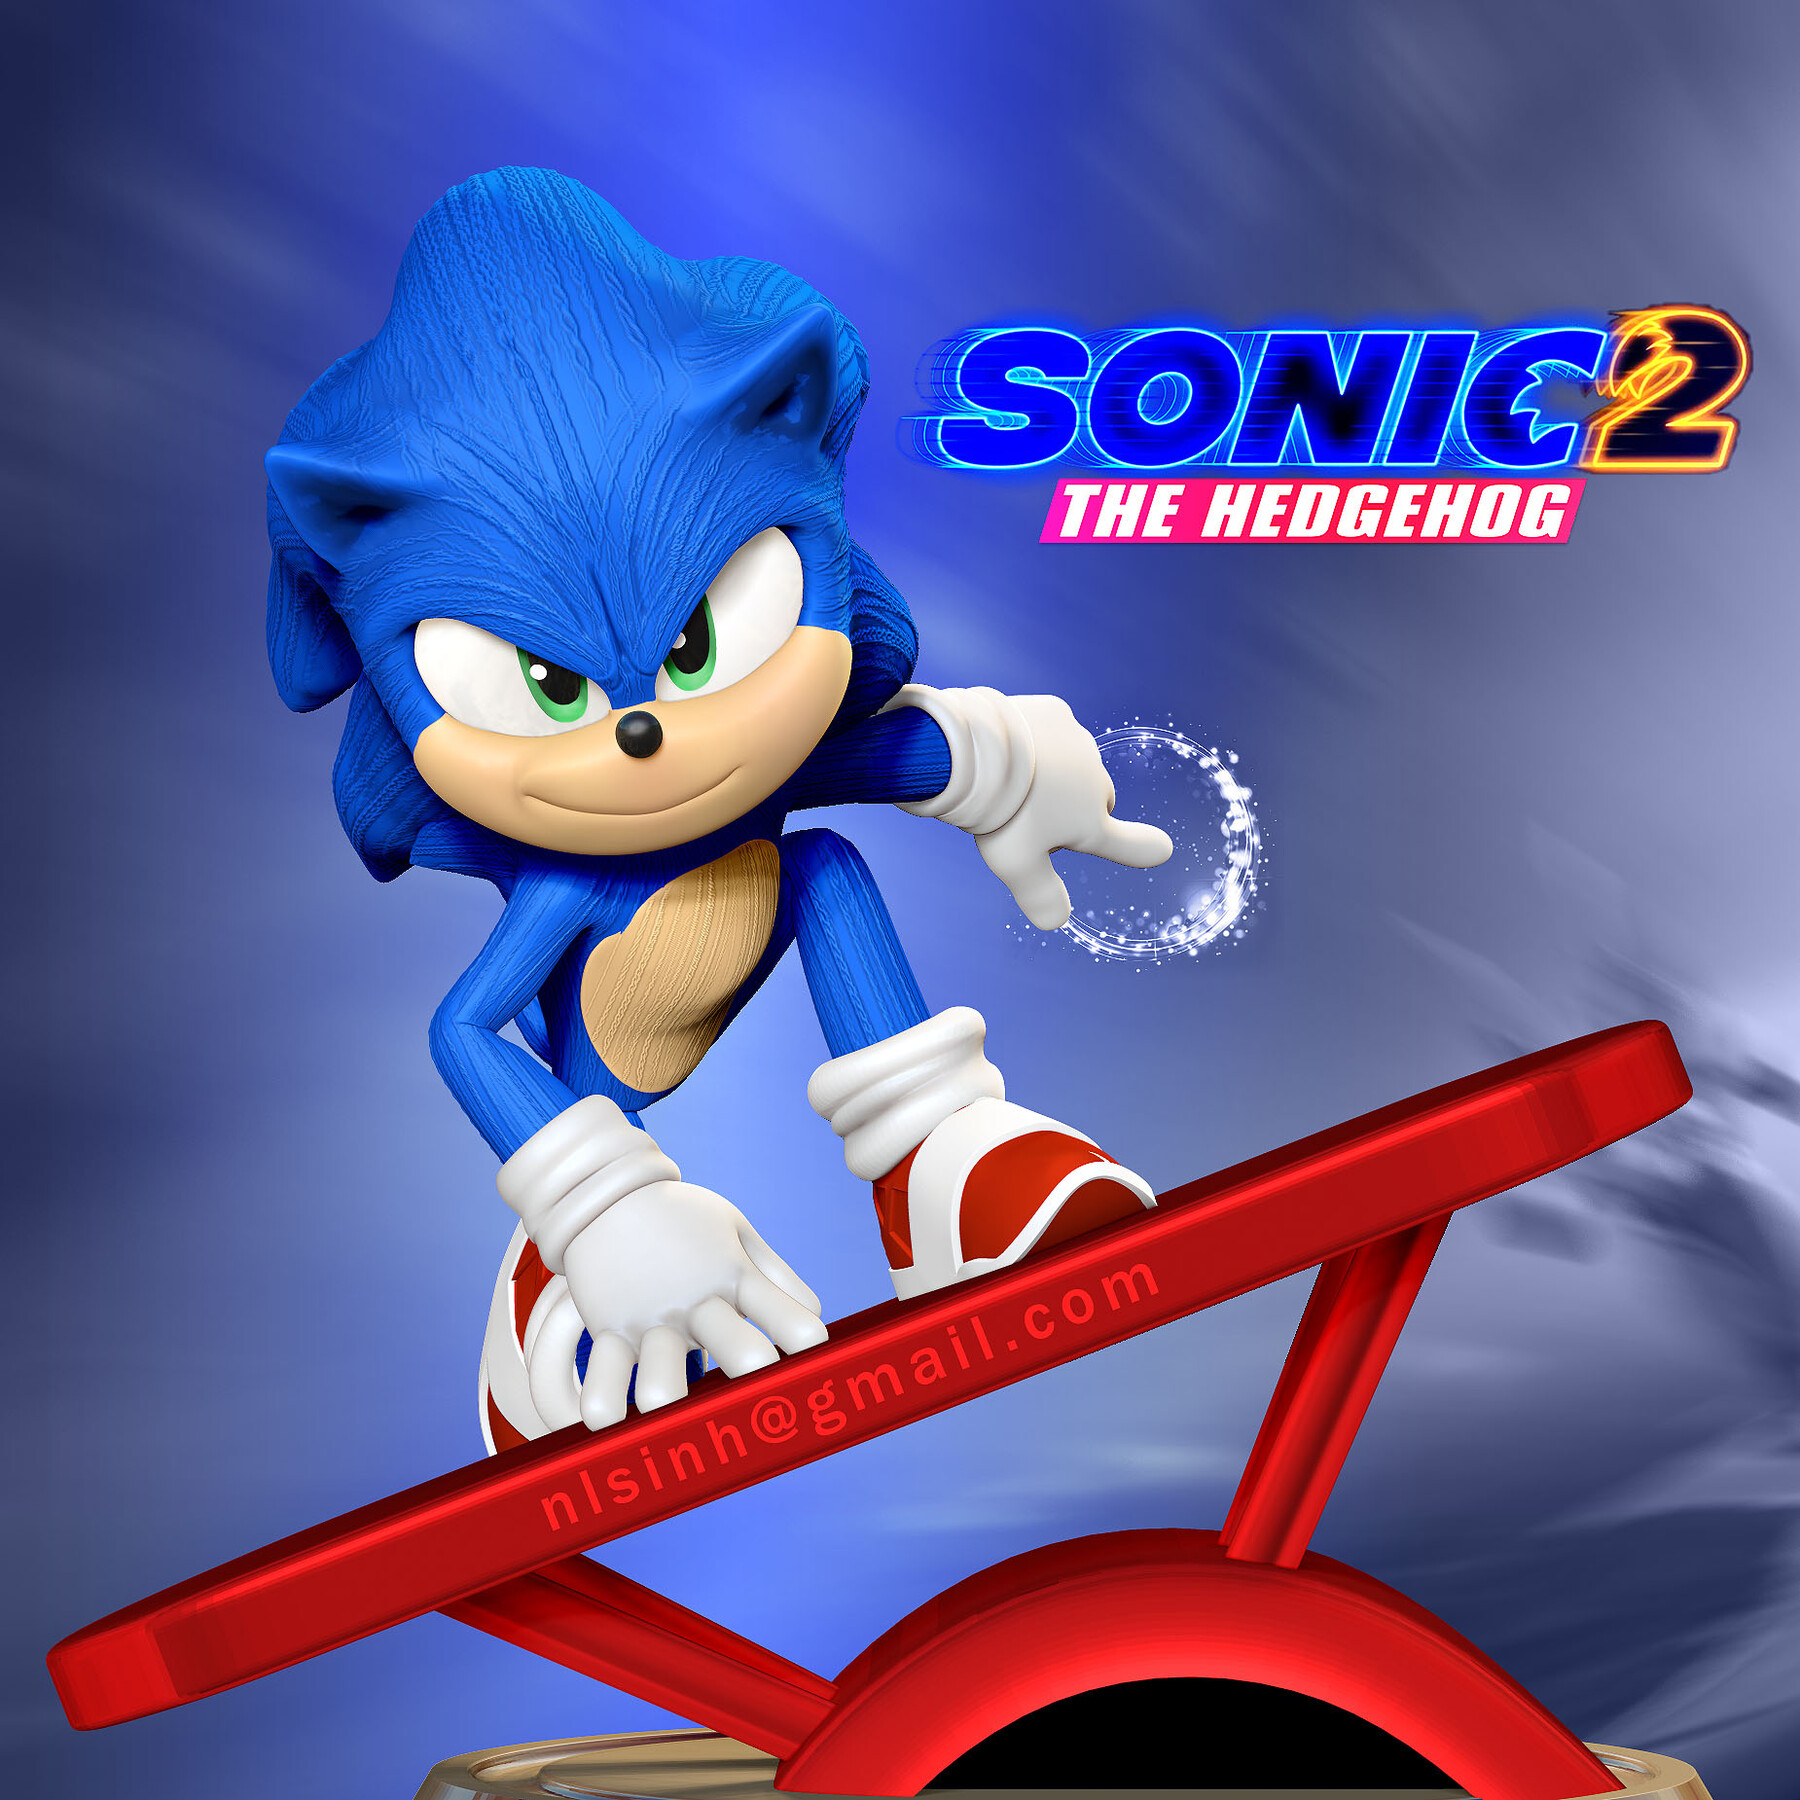 ArtStation - sonic the hedgehog 3 poster